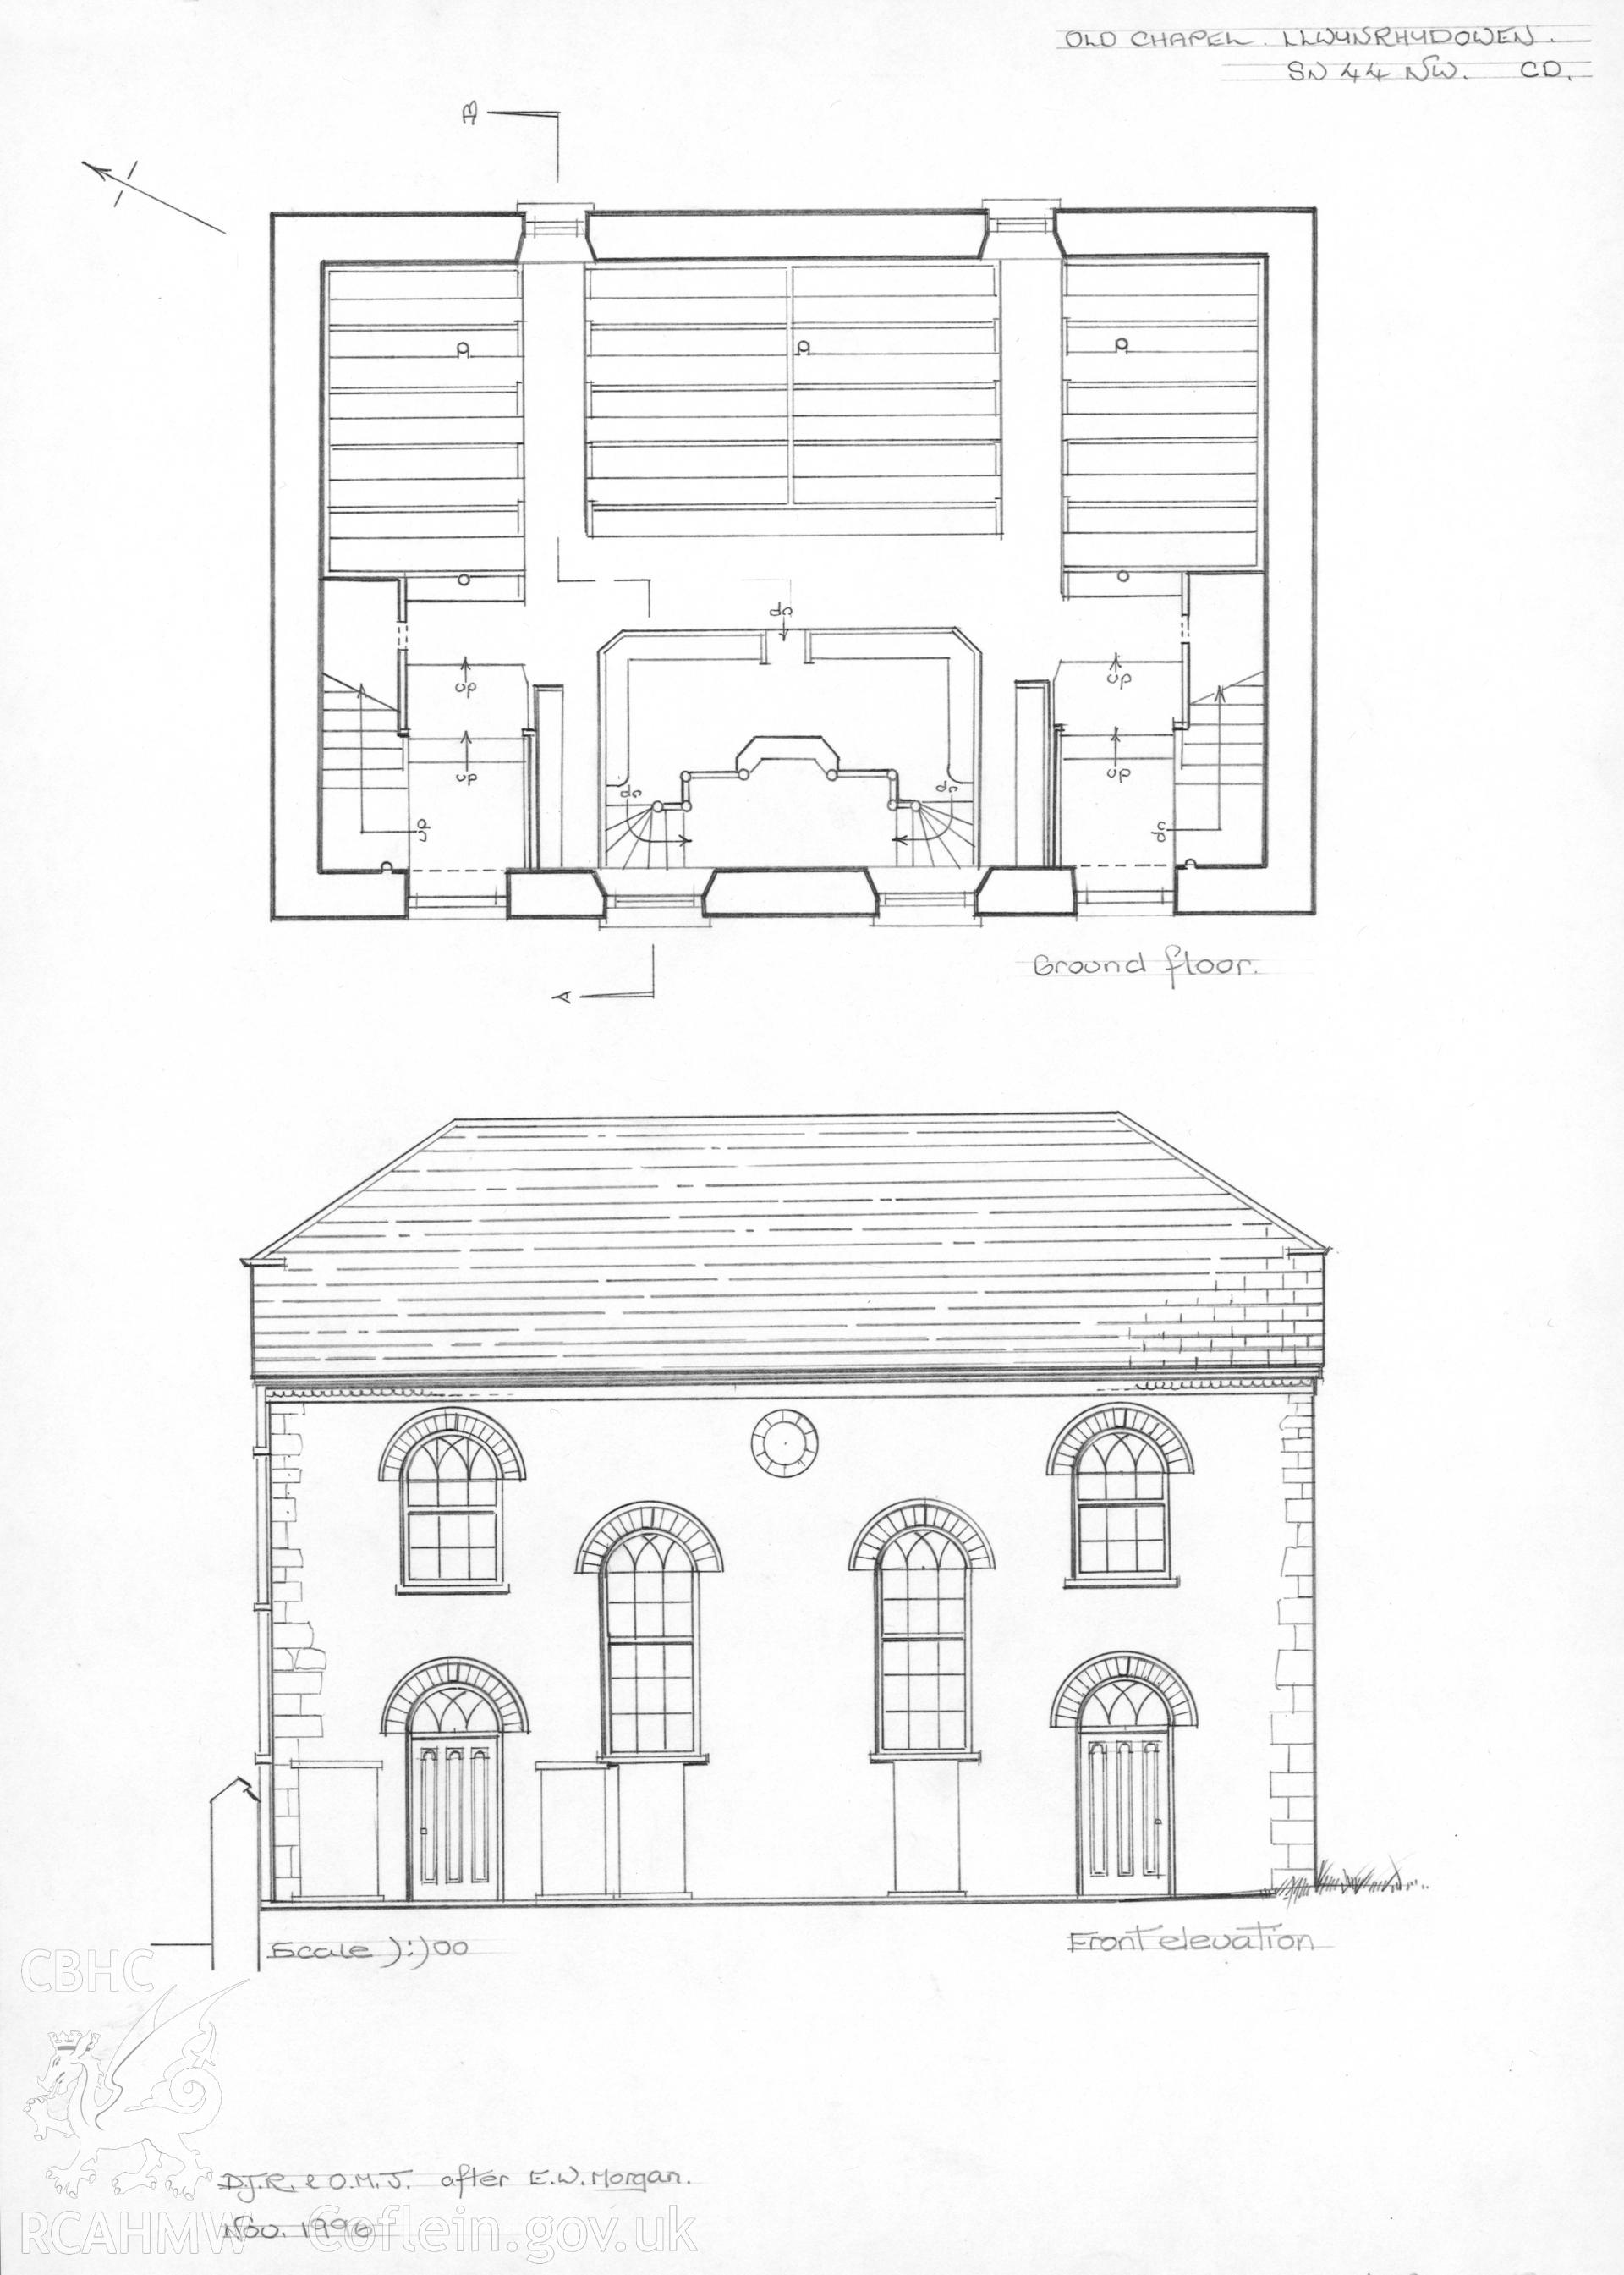 Llwynrhydowen Old Chapel, Llandysul; Pencil drawing comprising front elevation & ground floor plan by Dylan Roberts, dated November 1996.